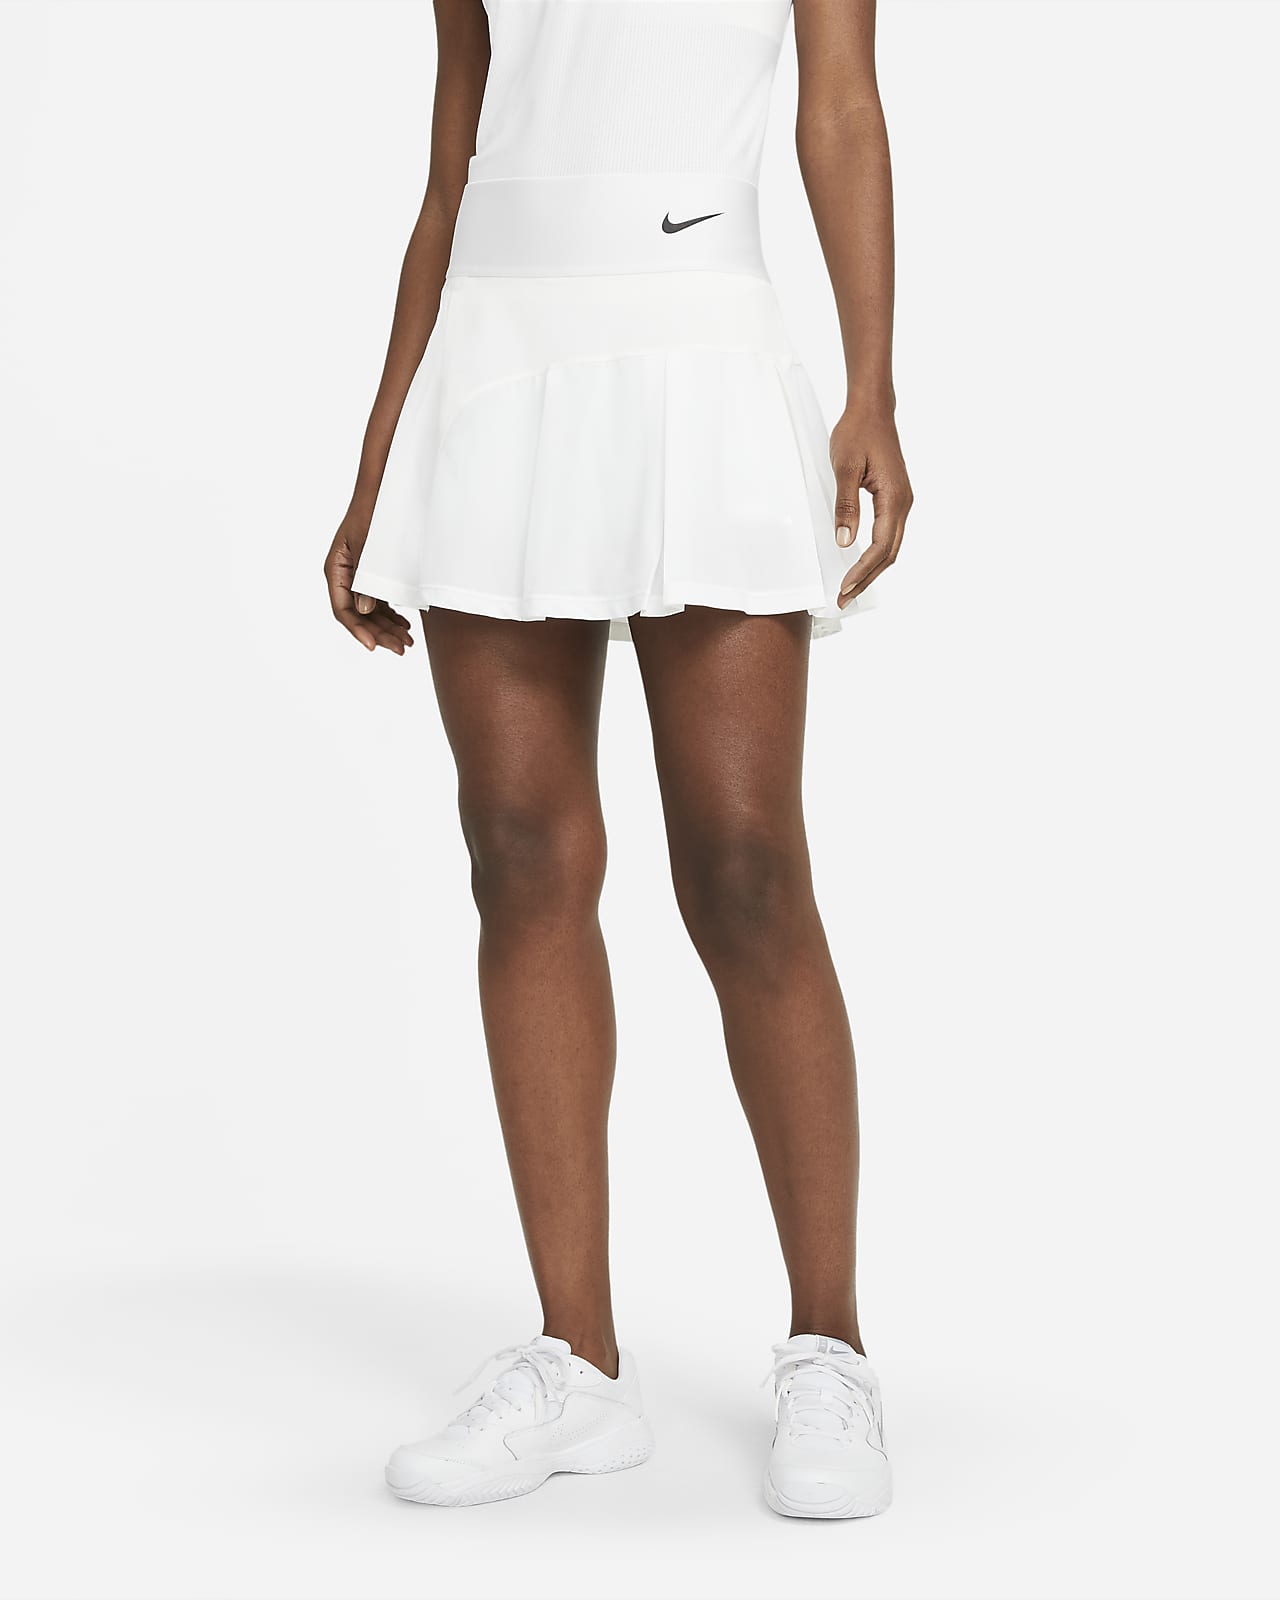 white tennis skirt size 20